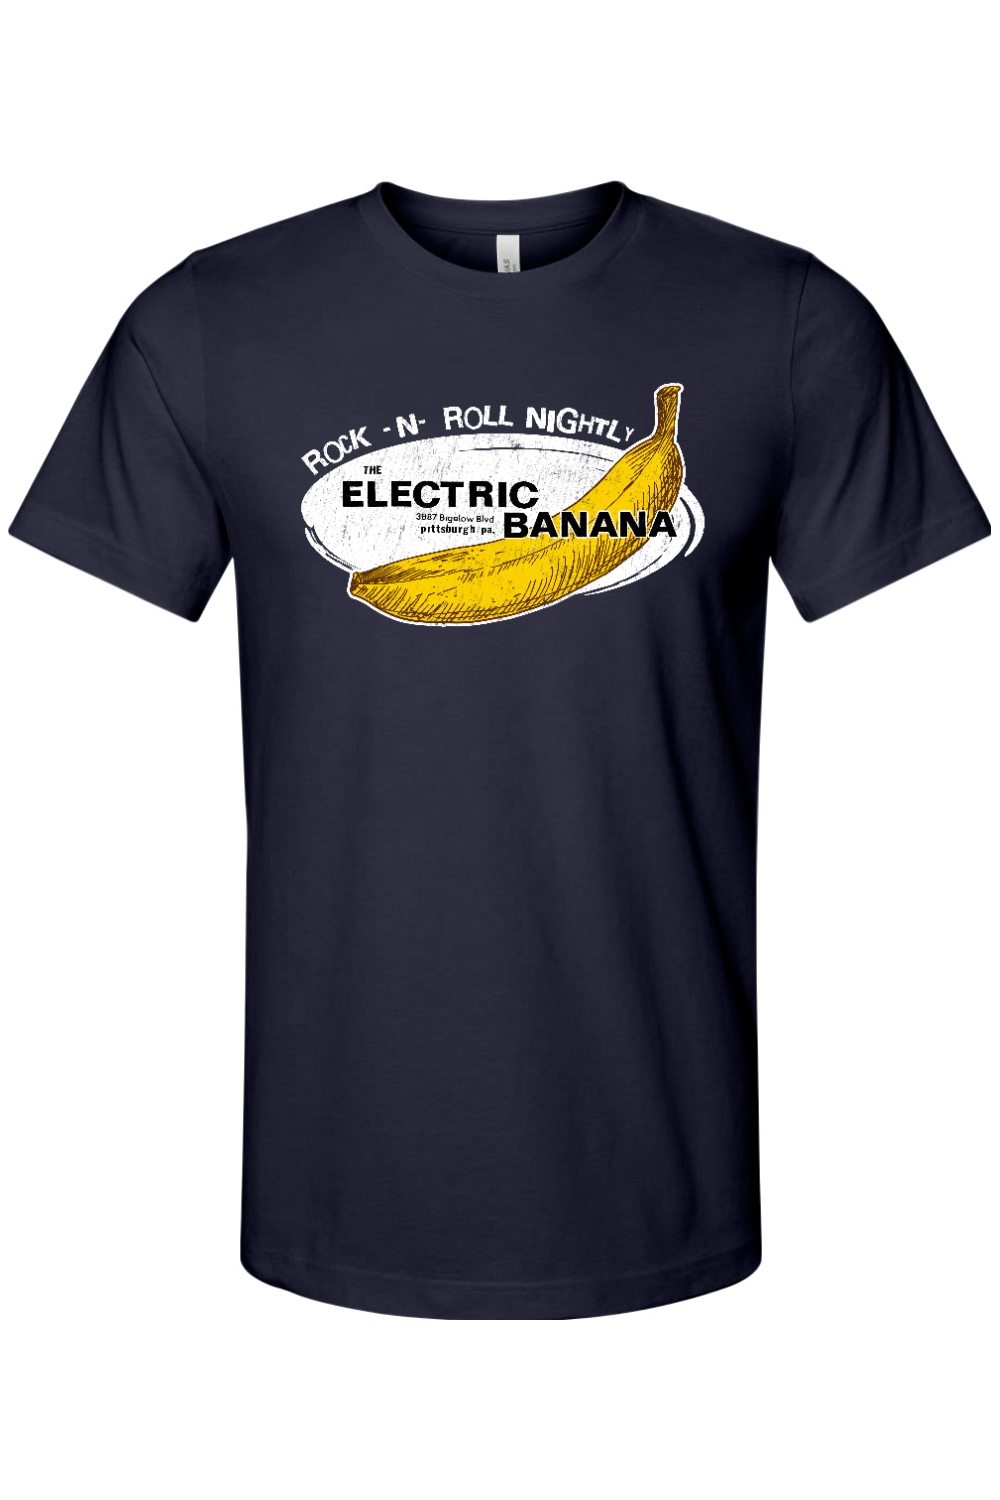 Electric Banana - Bella + Canvas Jersey Tee - Yinzylvania